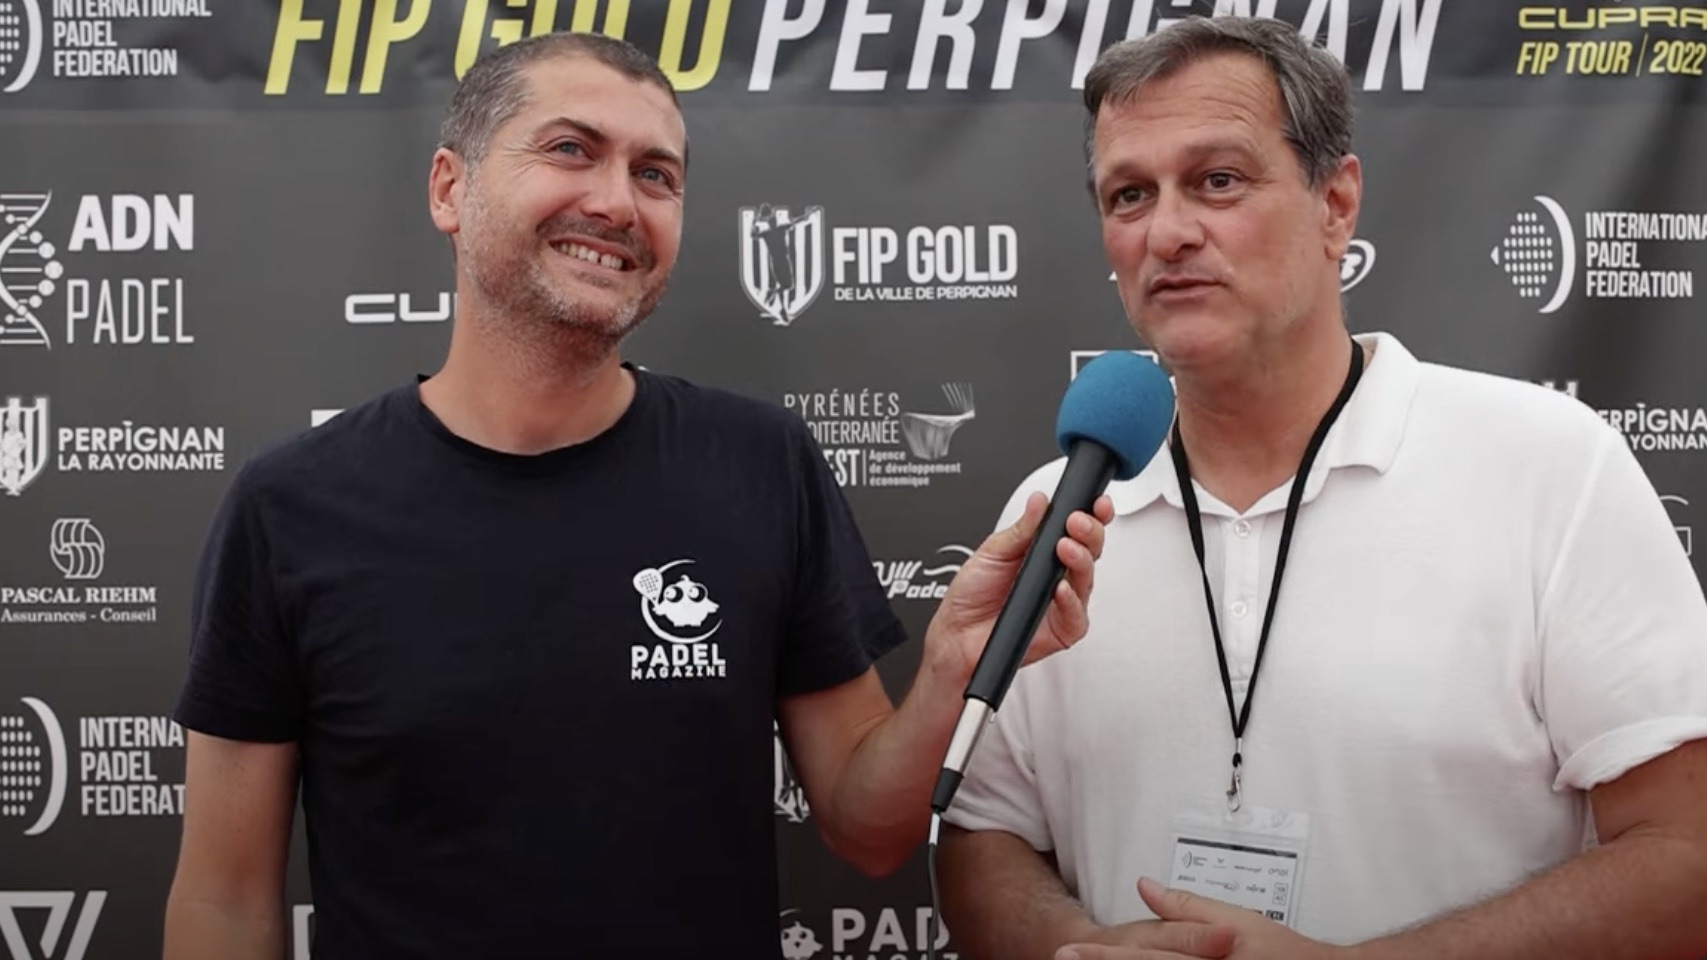 Louis Aliot: “O Perpignan FIP Gold é uma festa”